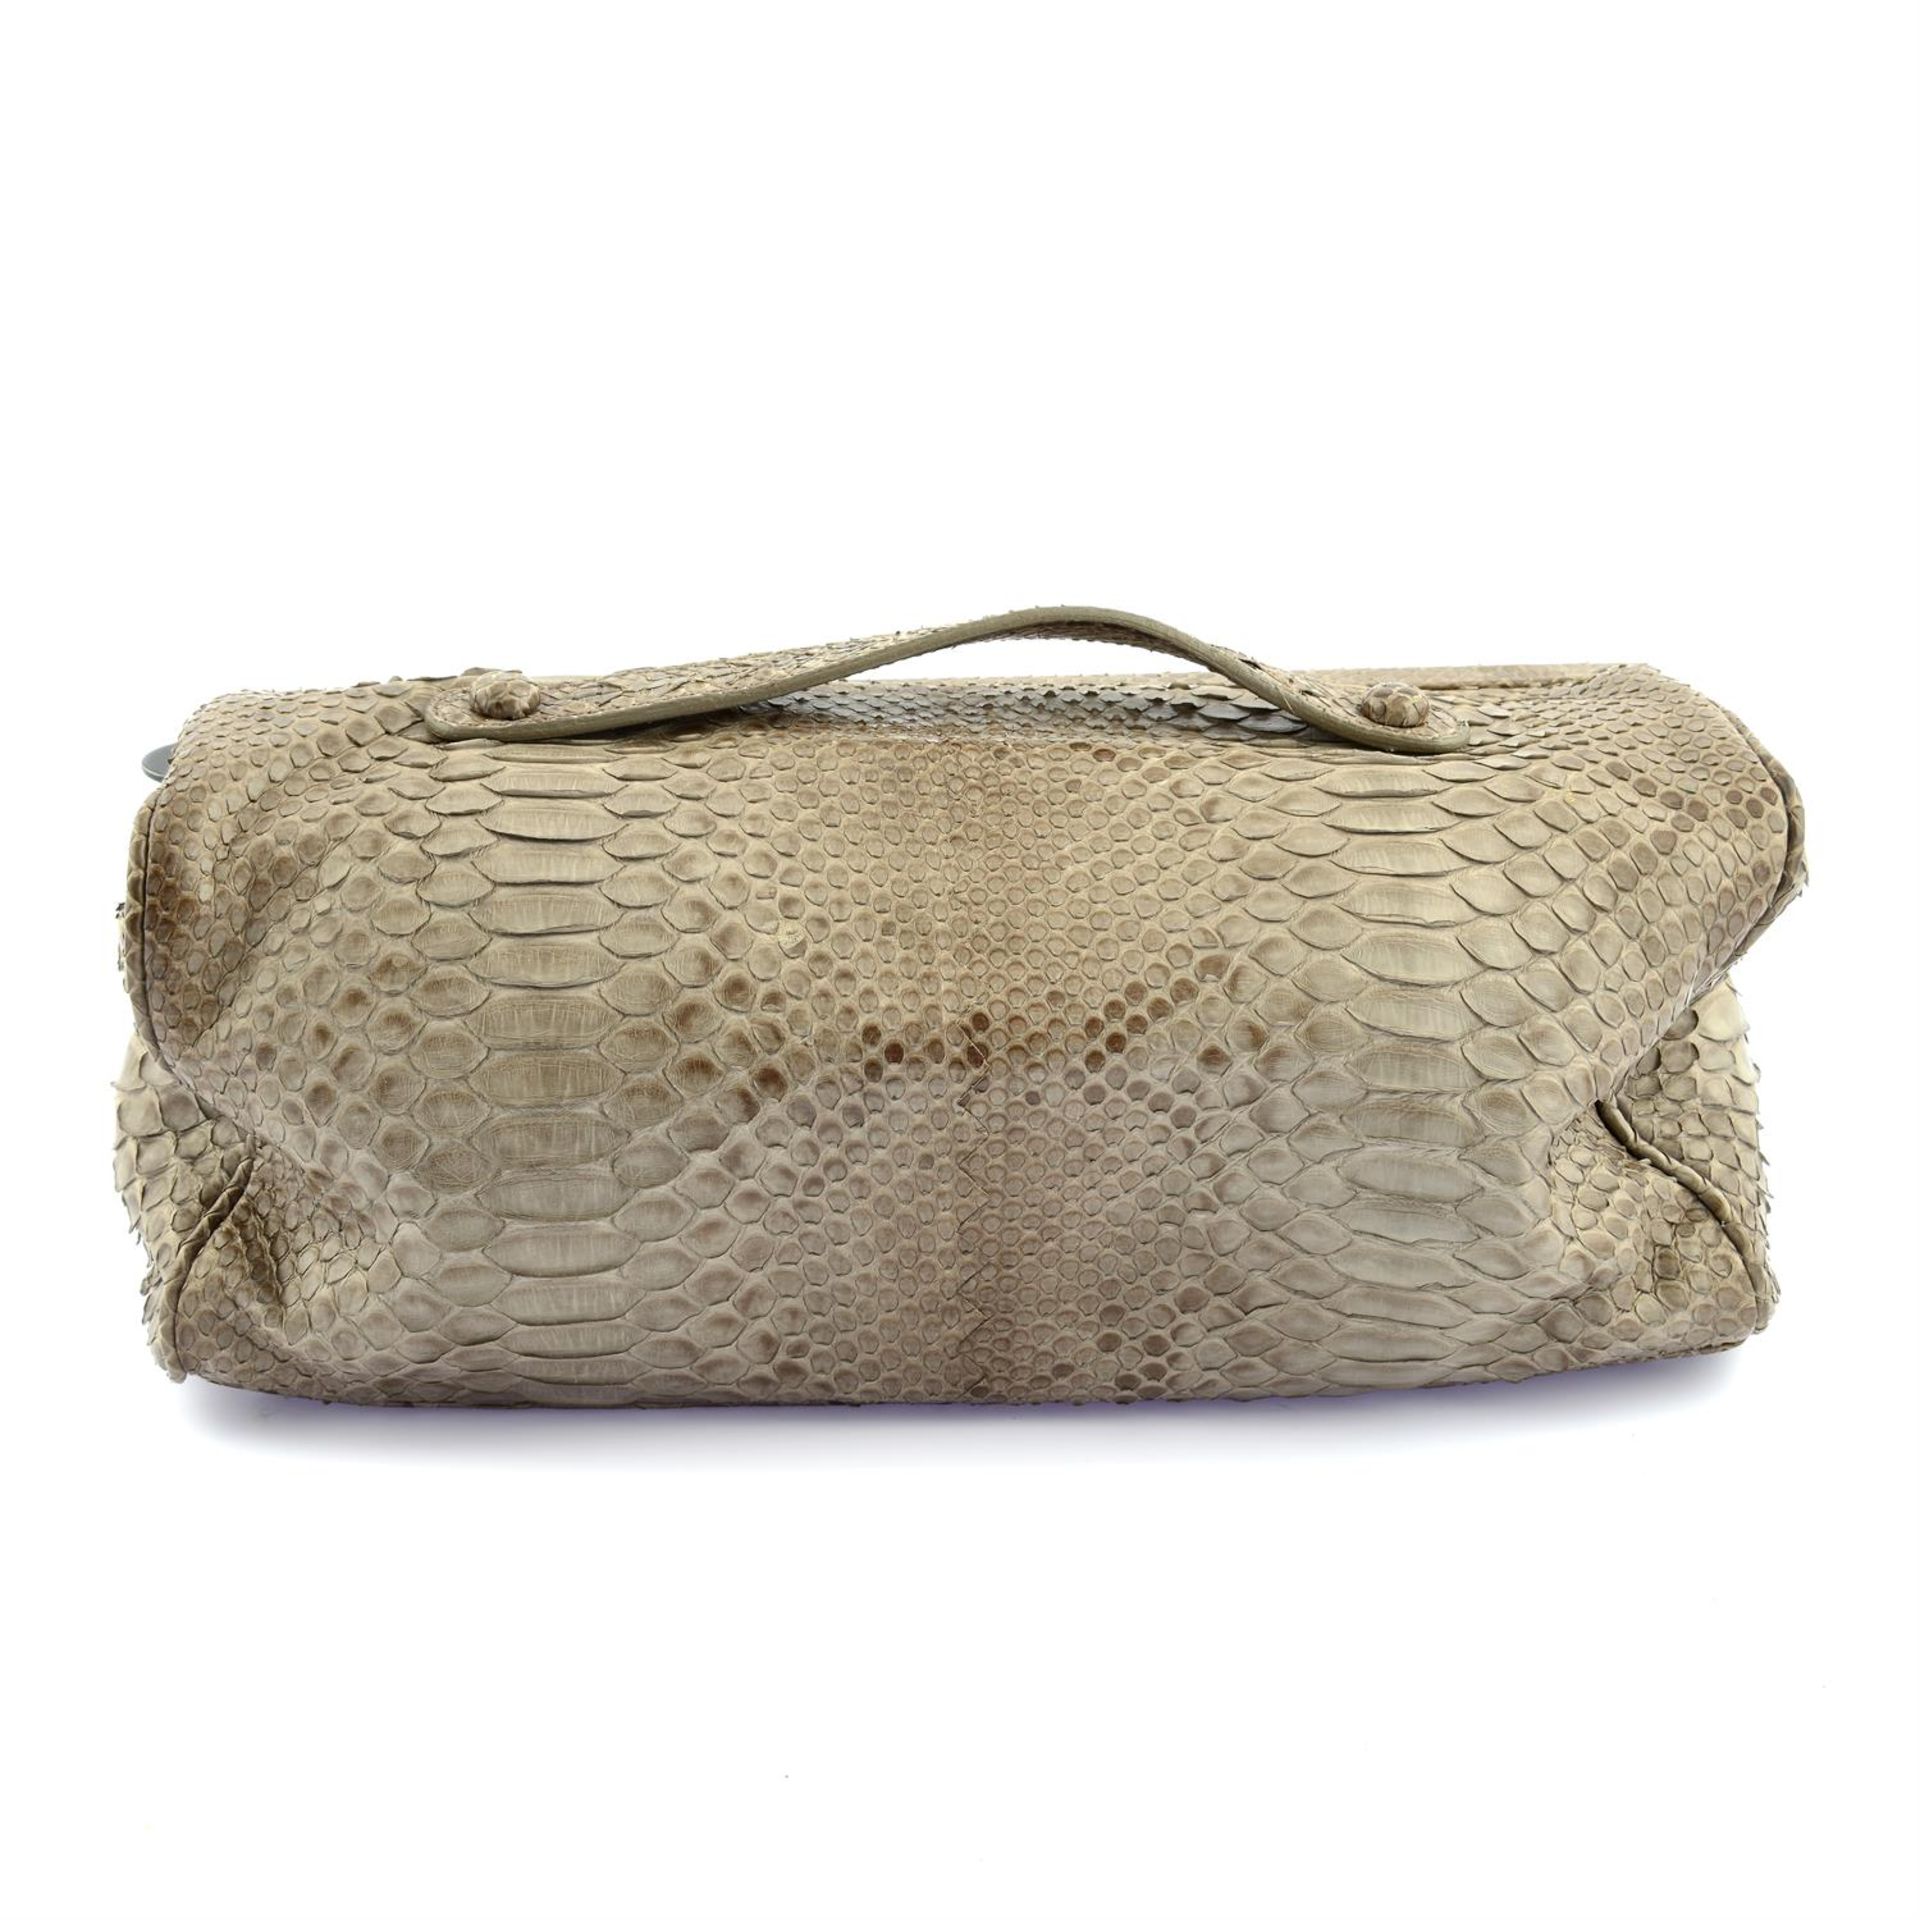 BOTTEGA VENETA - a brown Python leather clutch bag. - Bild 2 aus 4